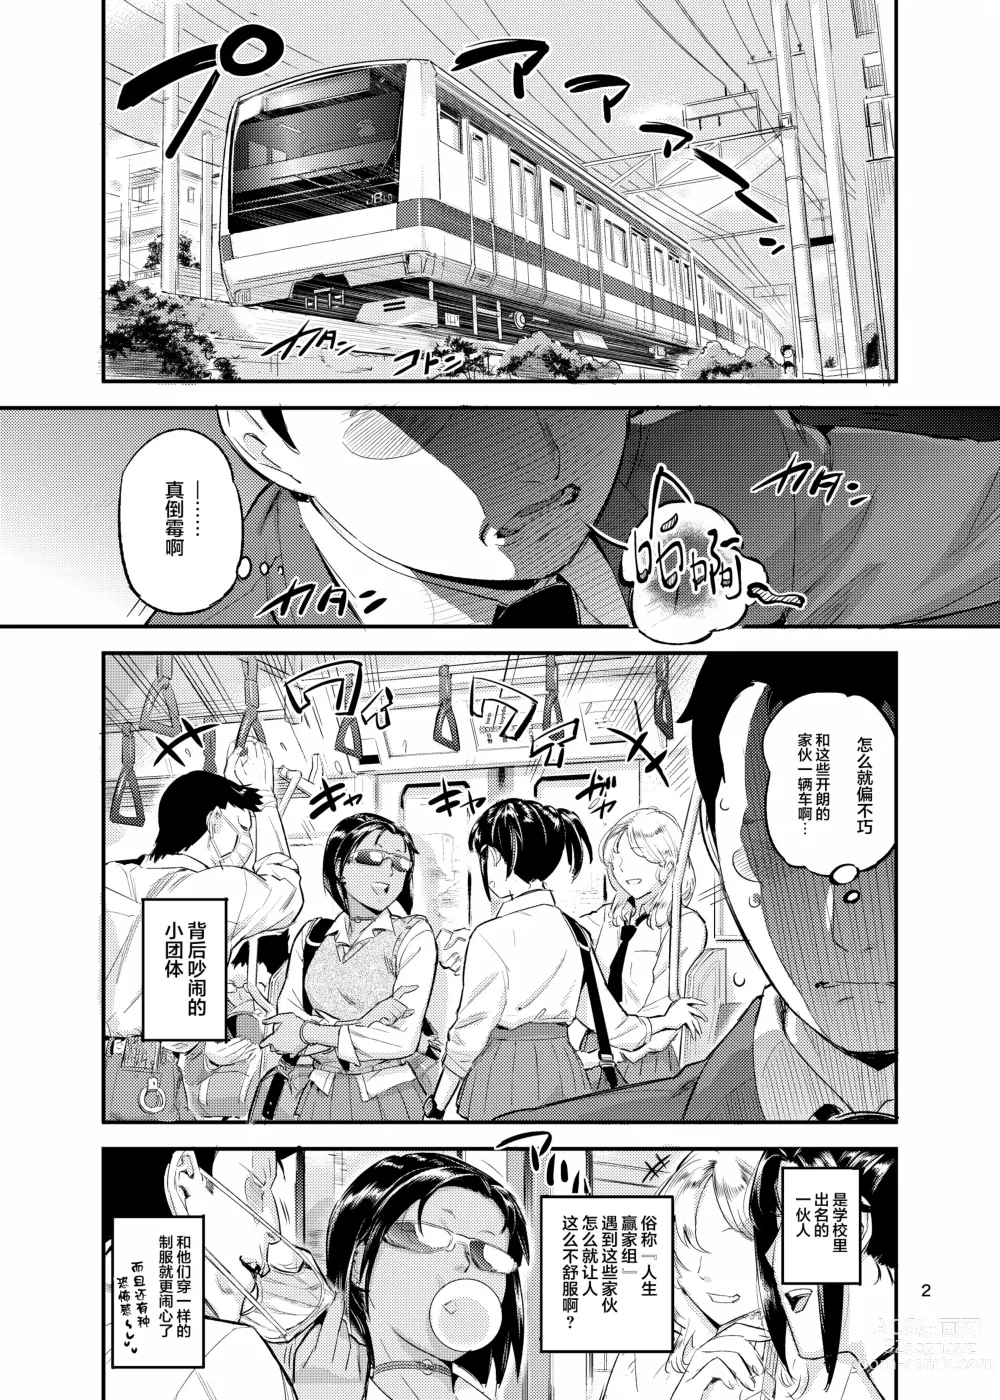 Page 2 of doujinshi 涎みつばッ!